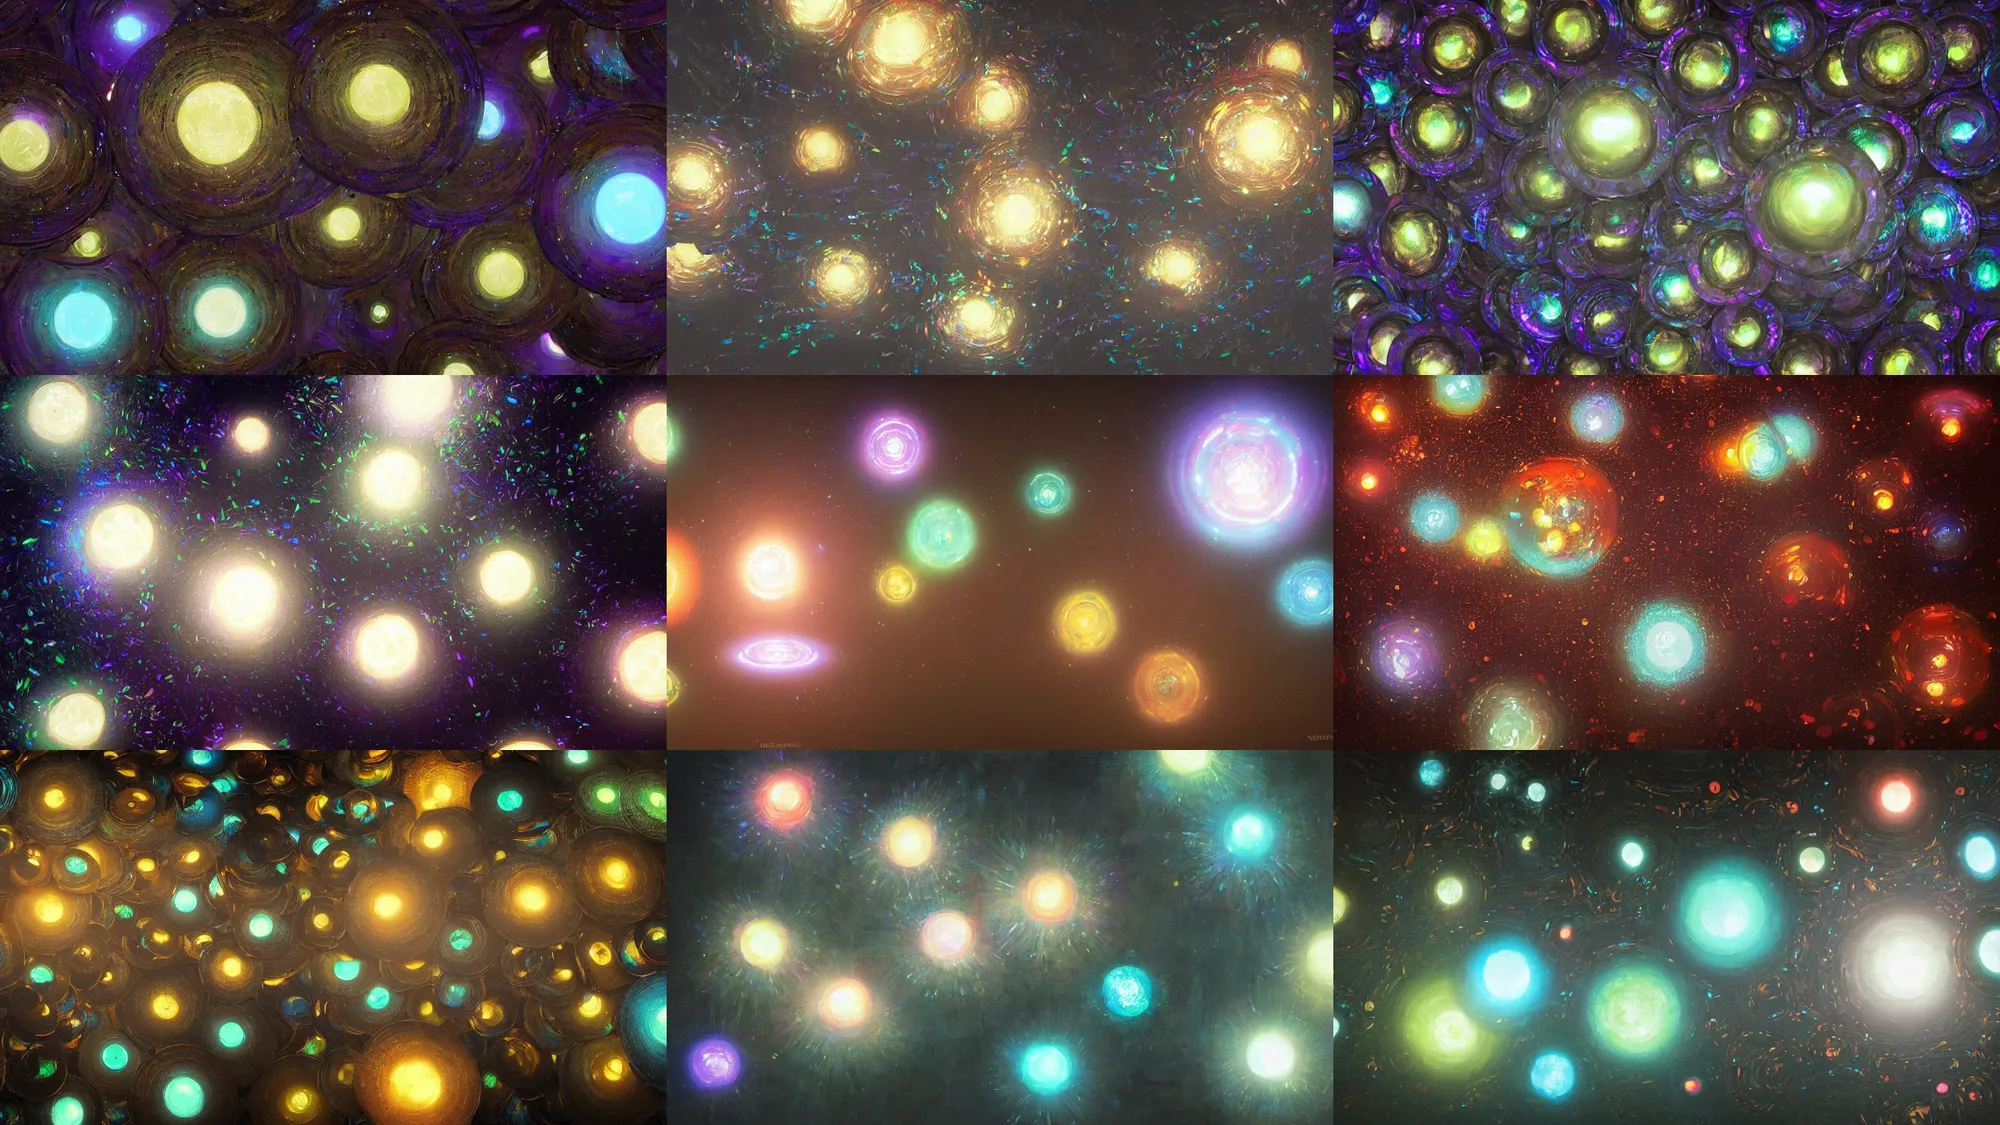 Prompt: swarm of glowing iridescent discs, by greg rutkowski